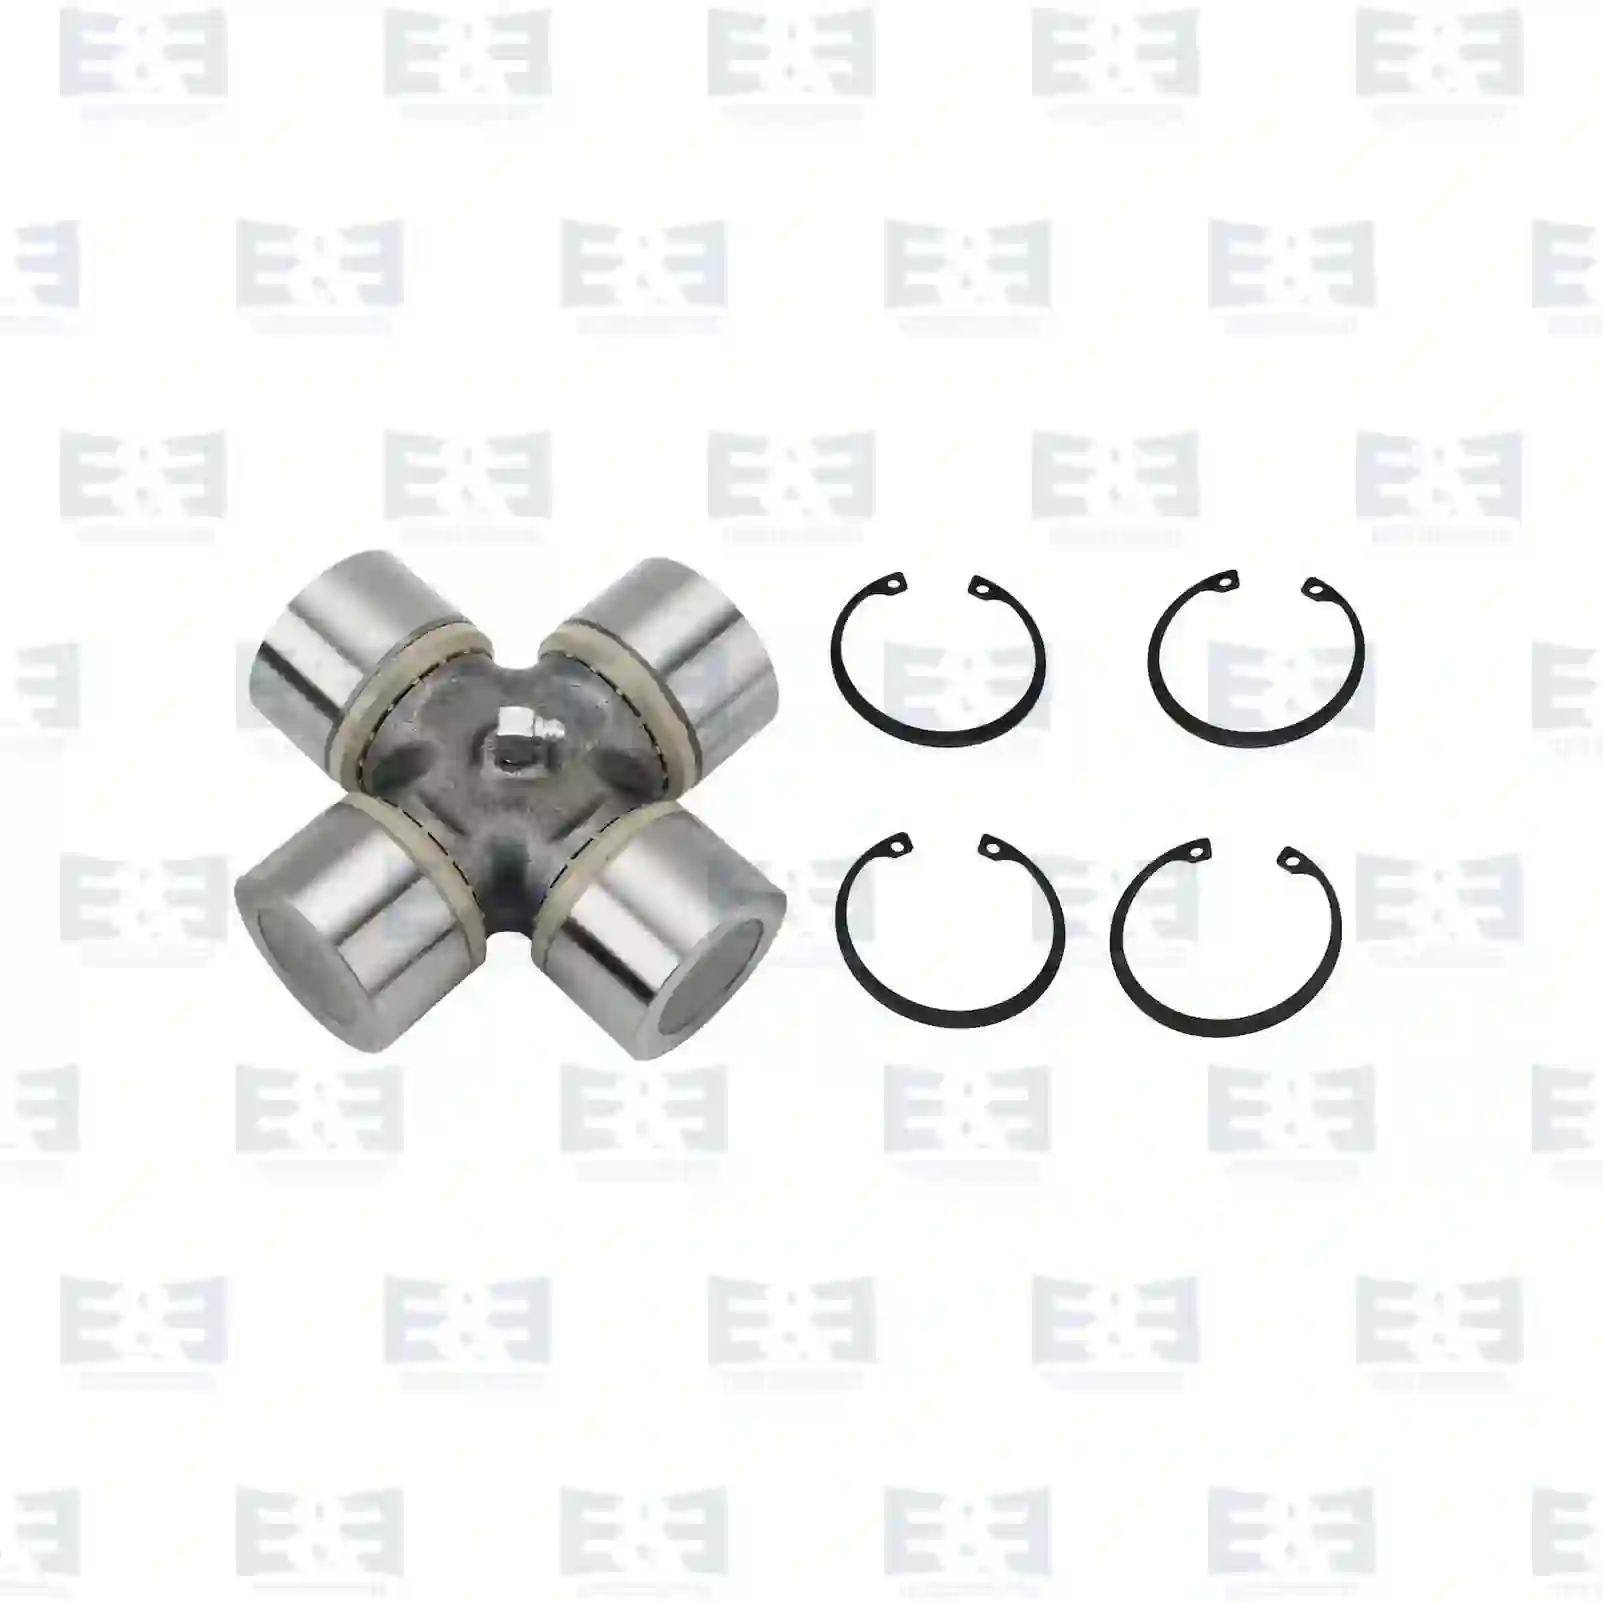  Joint cross || E&E Truck Spare Parts | Truck Spare Parts, Auotomotive Spare Parts